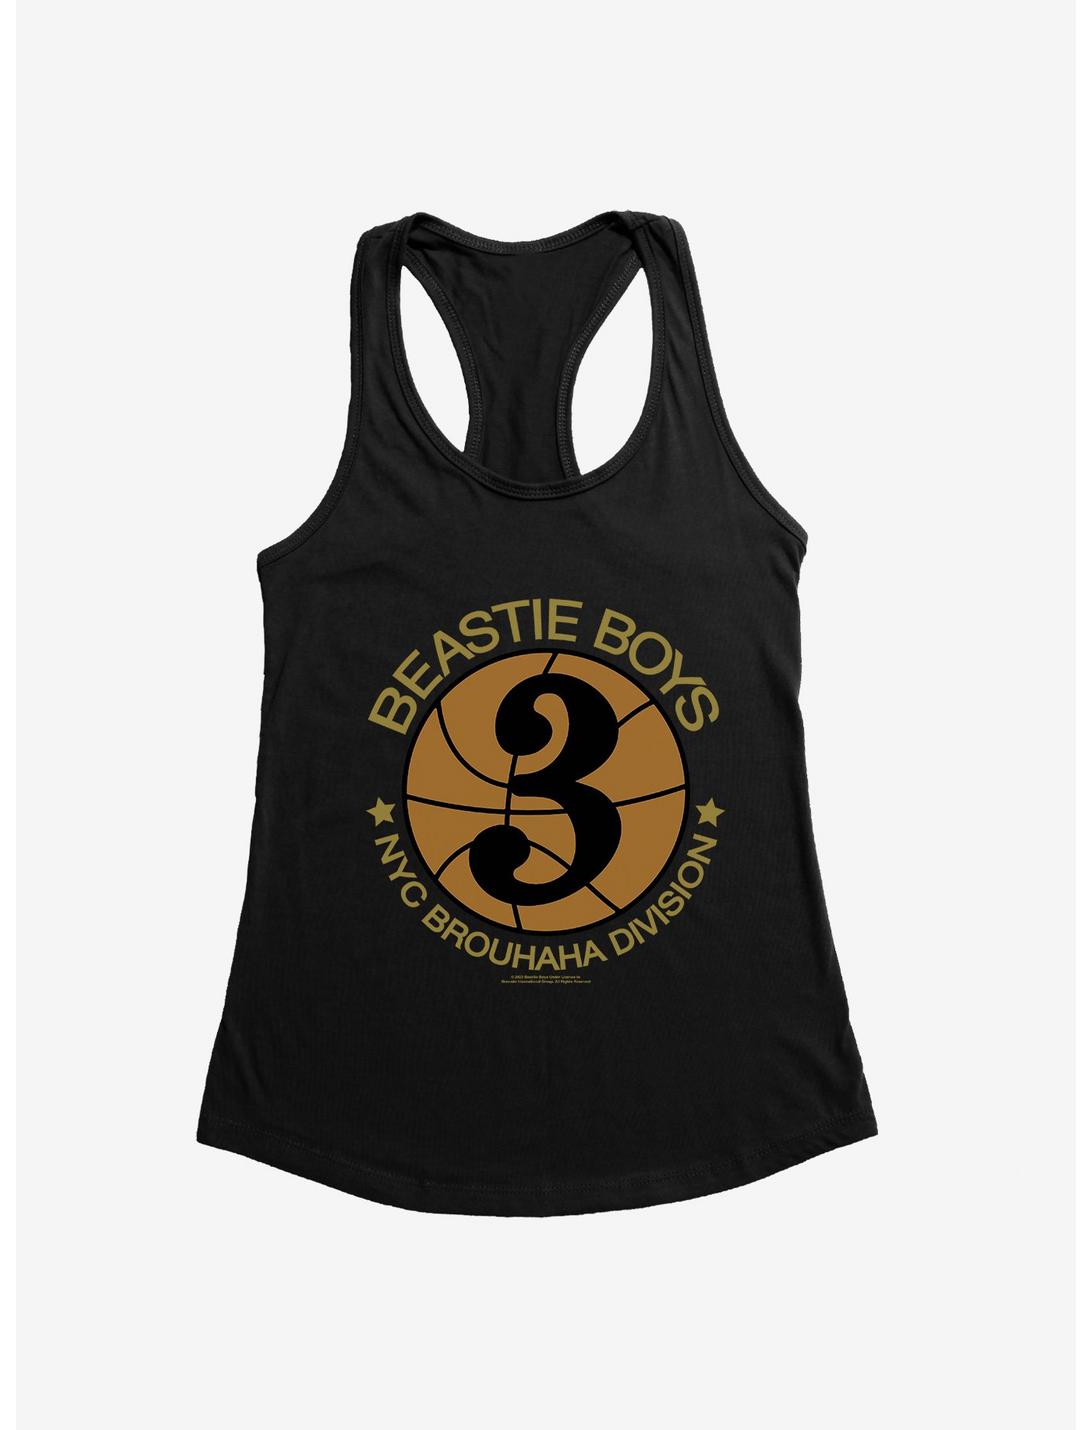 Beastie Boys NYC Brouhaha Division Girls Tank, BLACK, hi-res